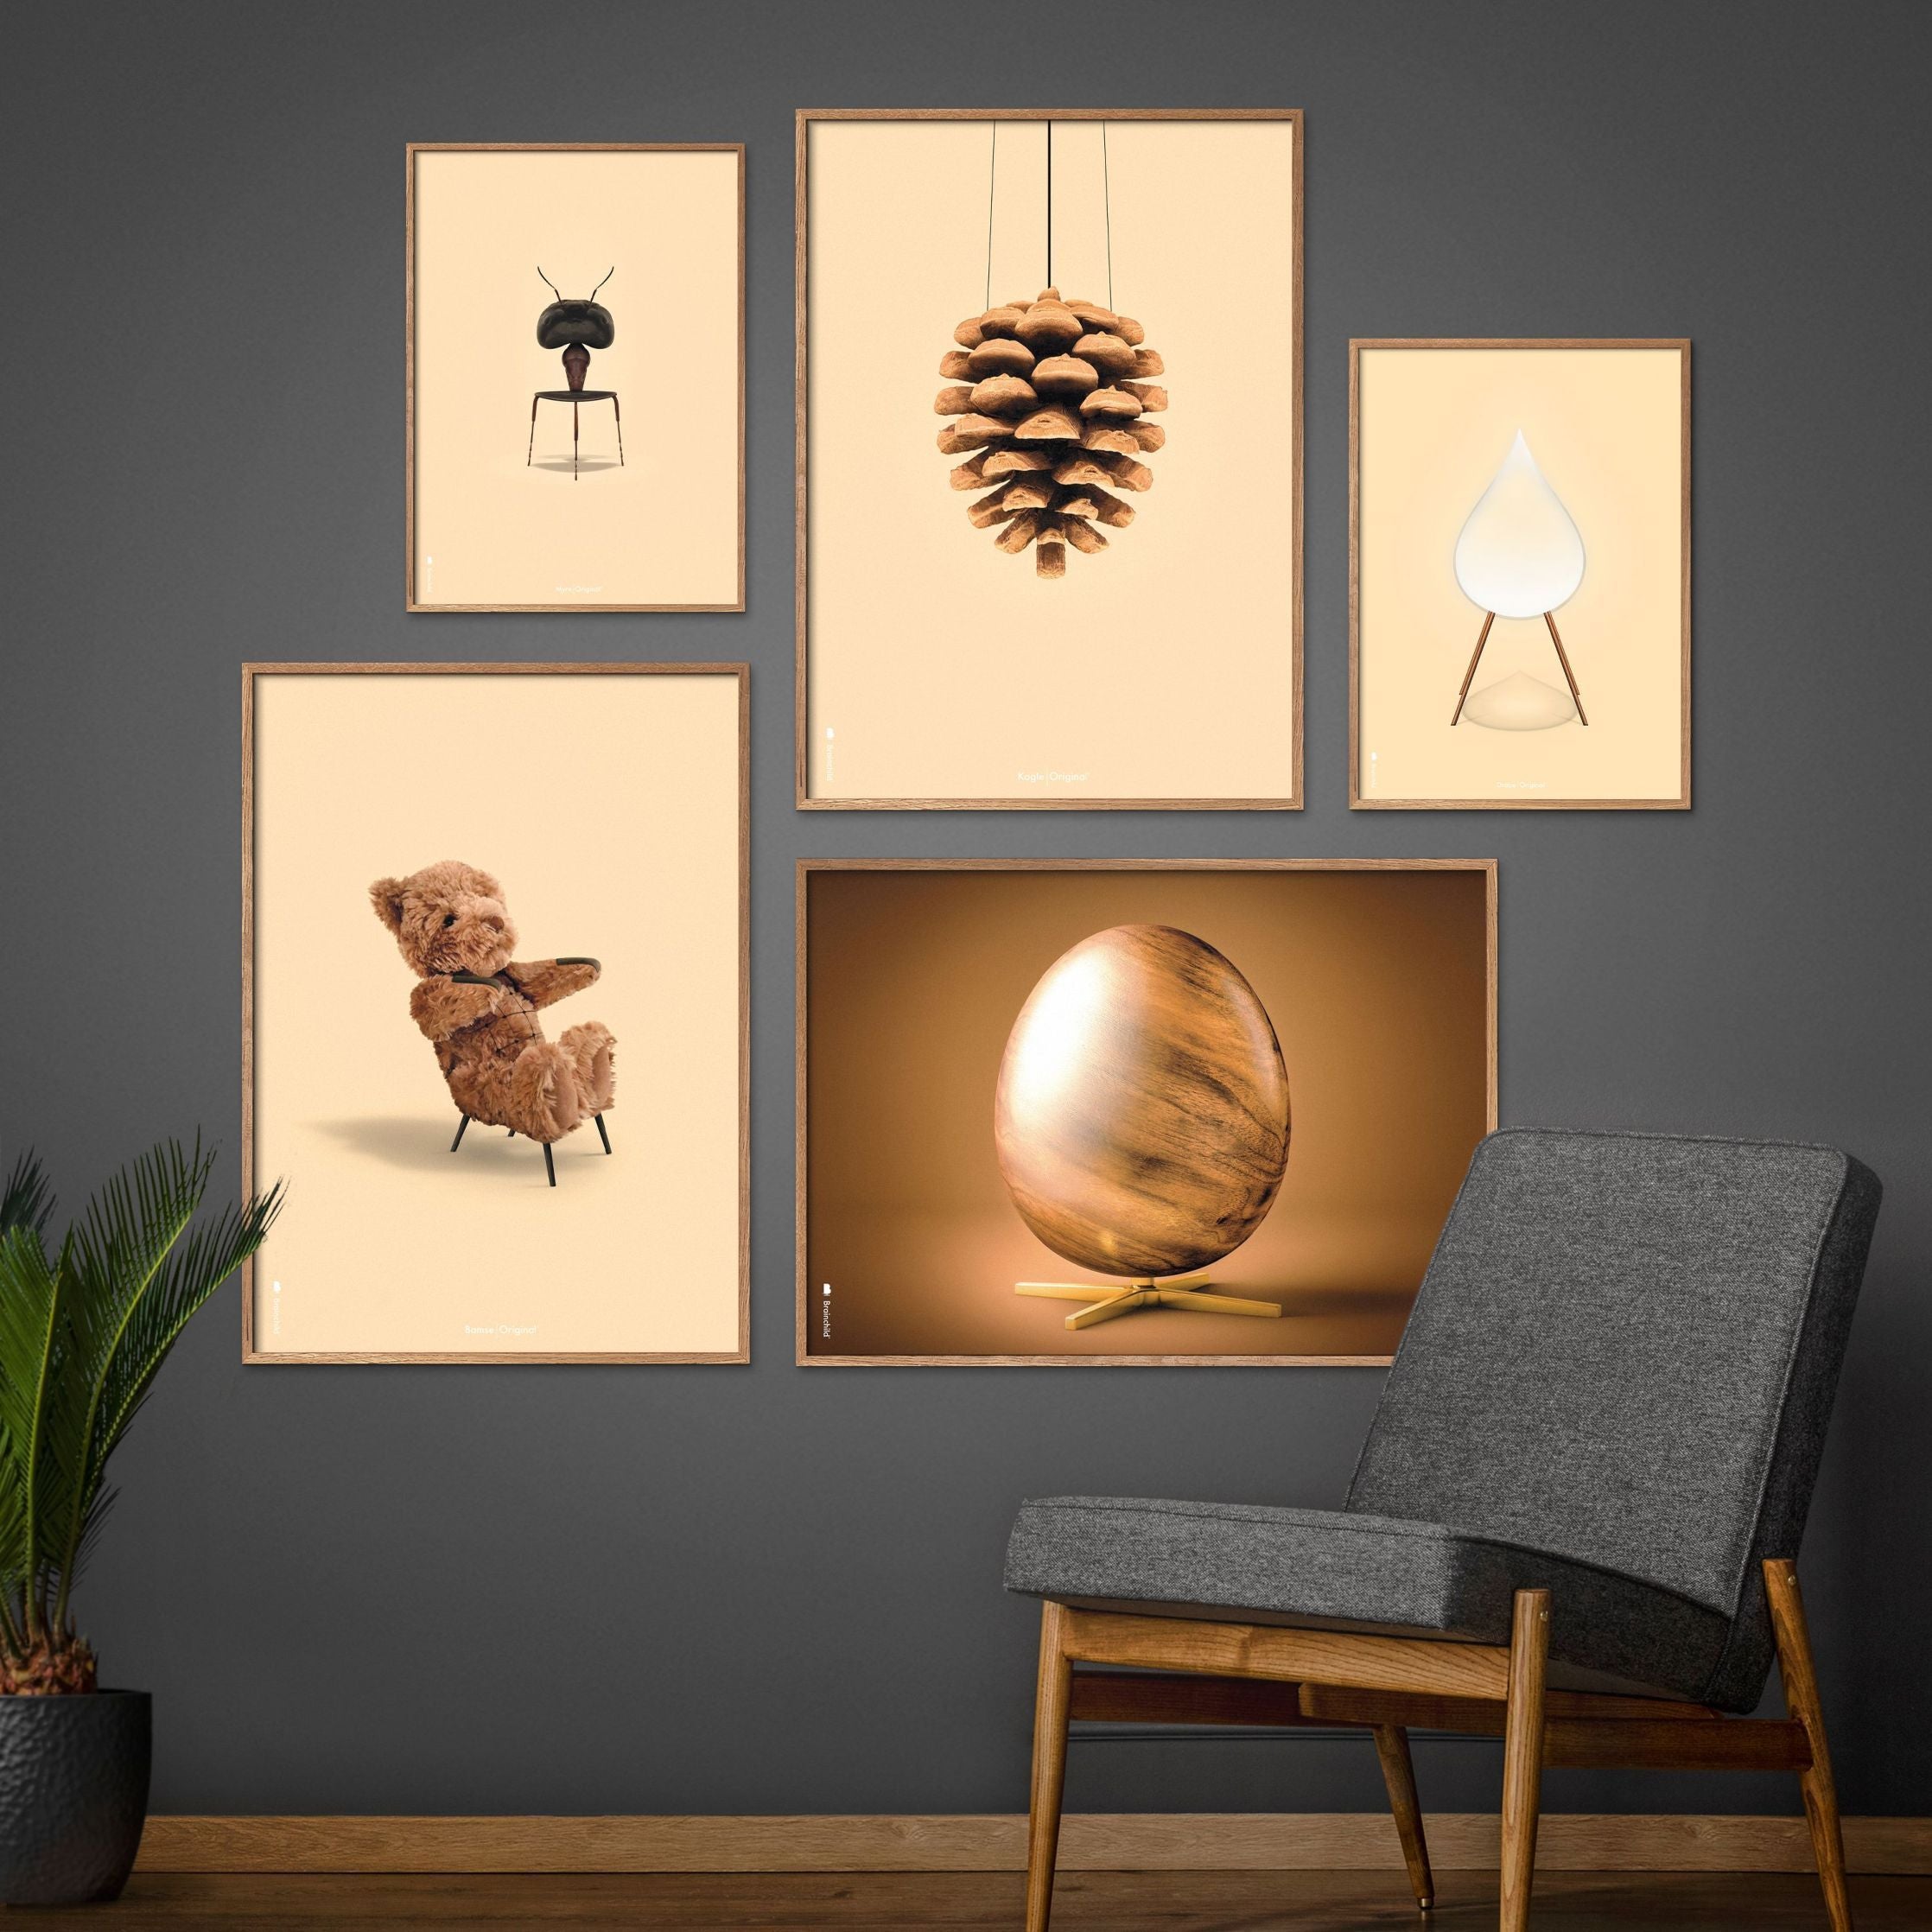 brainchild Pine Cone Classic Poster ohne Rahmen 50x70 cm, sandfarbener Hintergrund